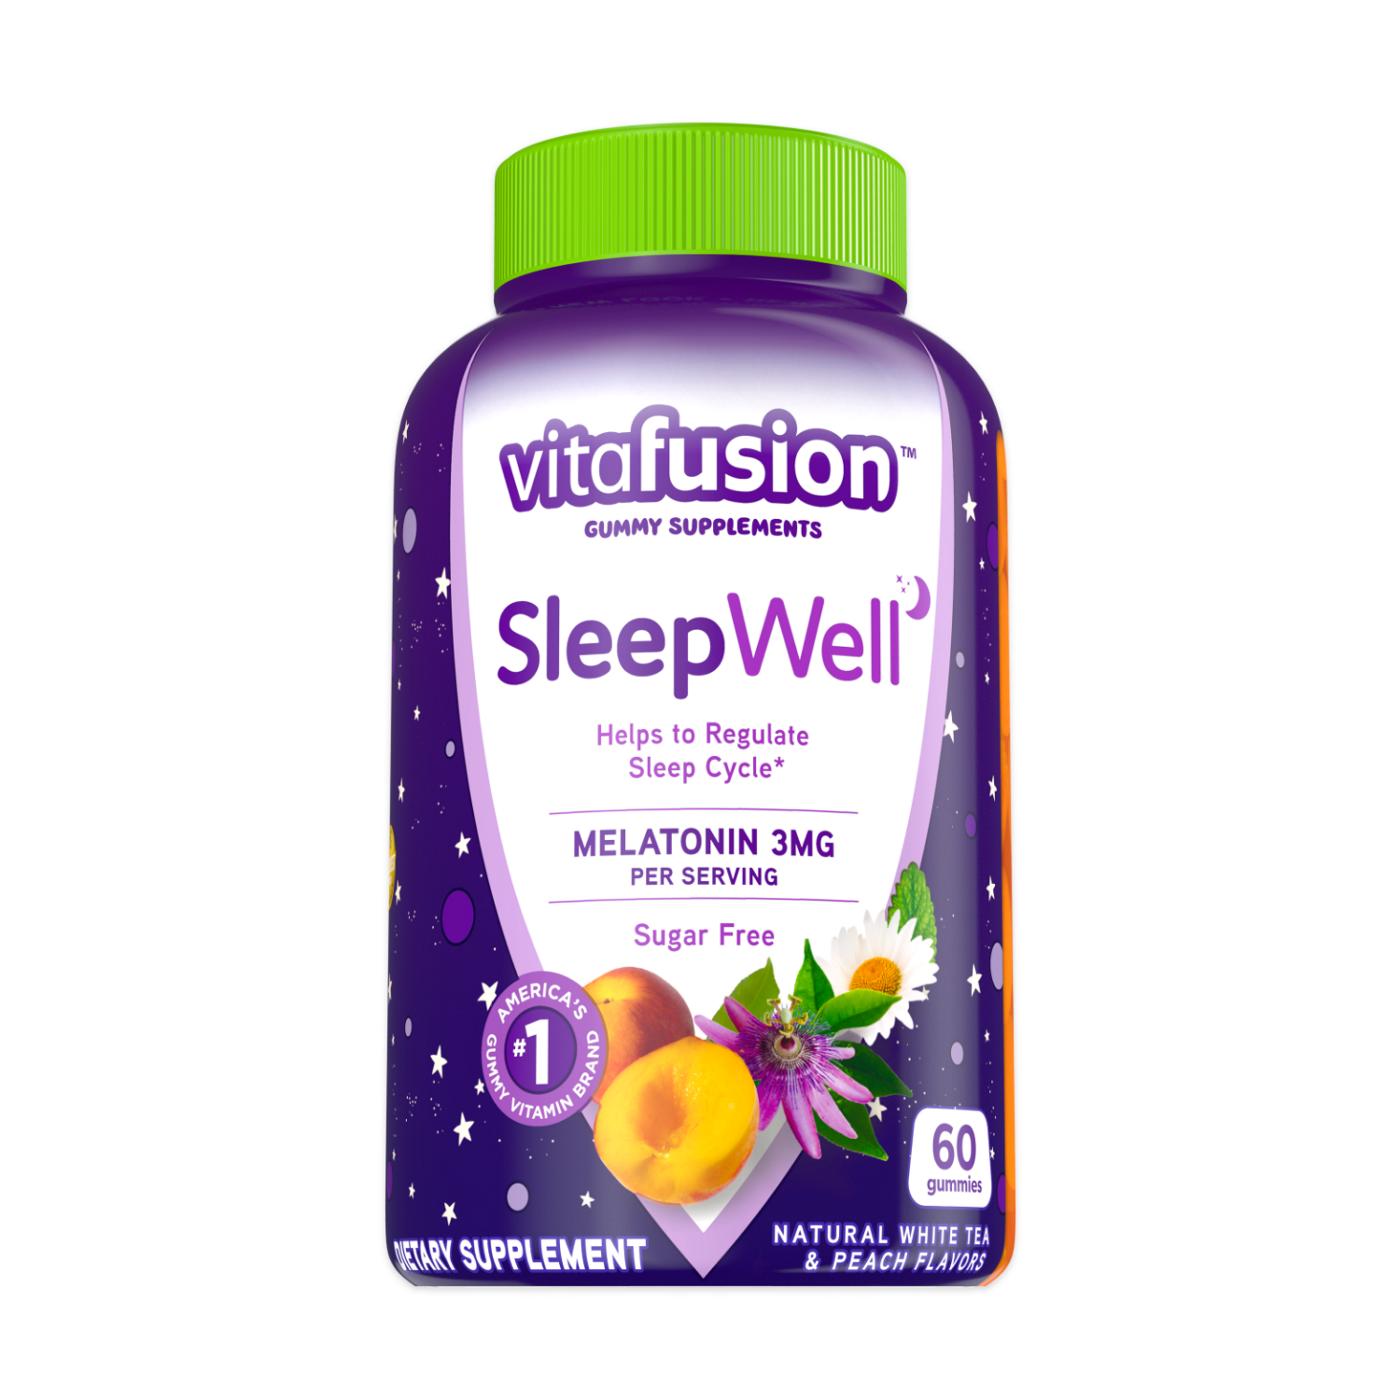 Vitafusion Sleepwell Sleep Well Gummy Sleep Support for Adults White Tea with Passion Fruit; image 1 of 6